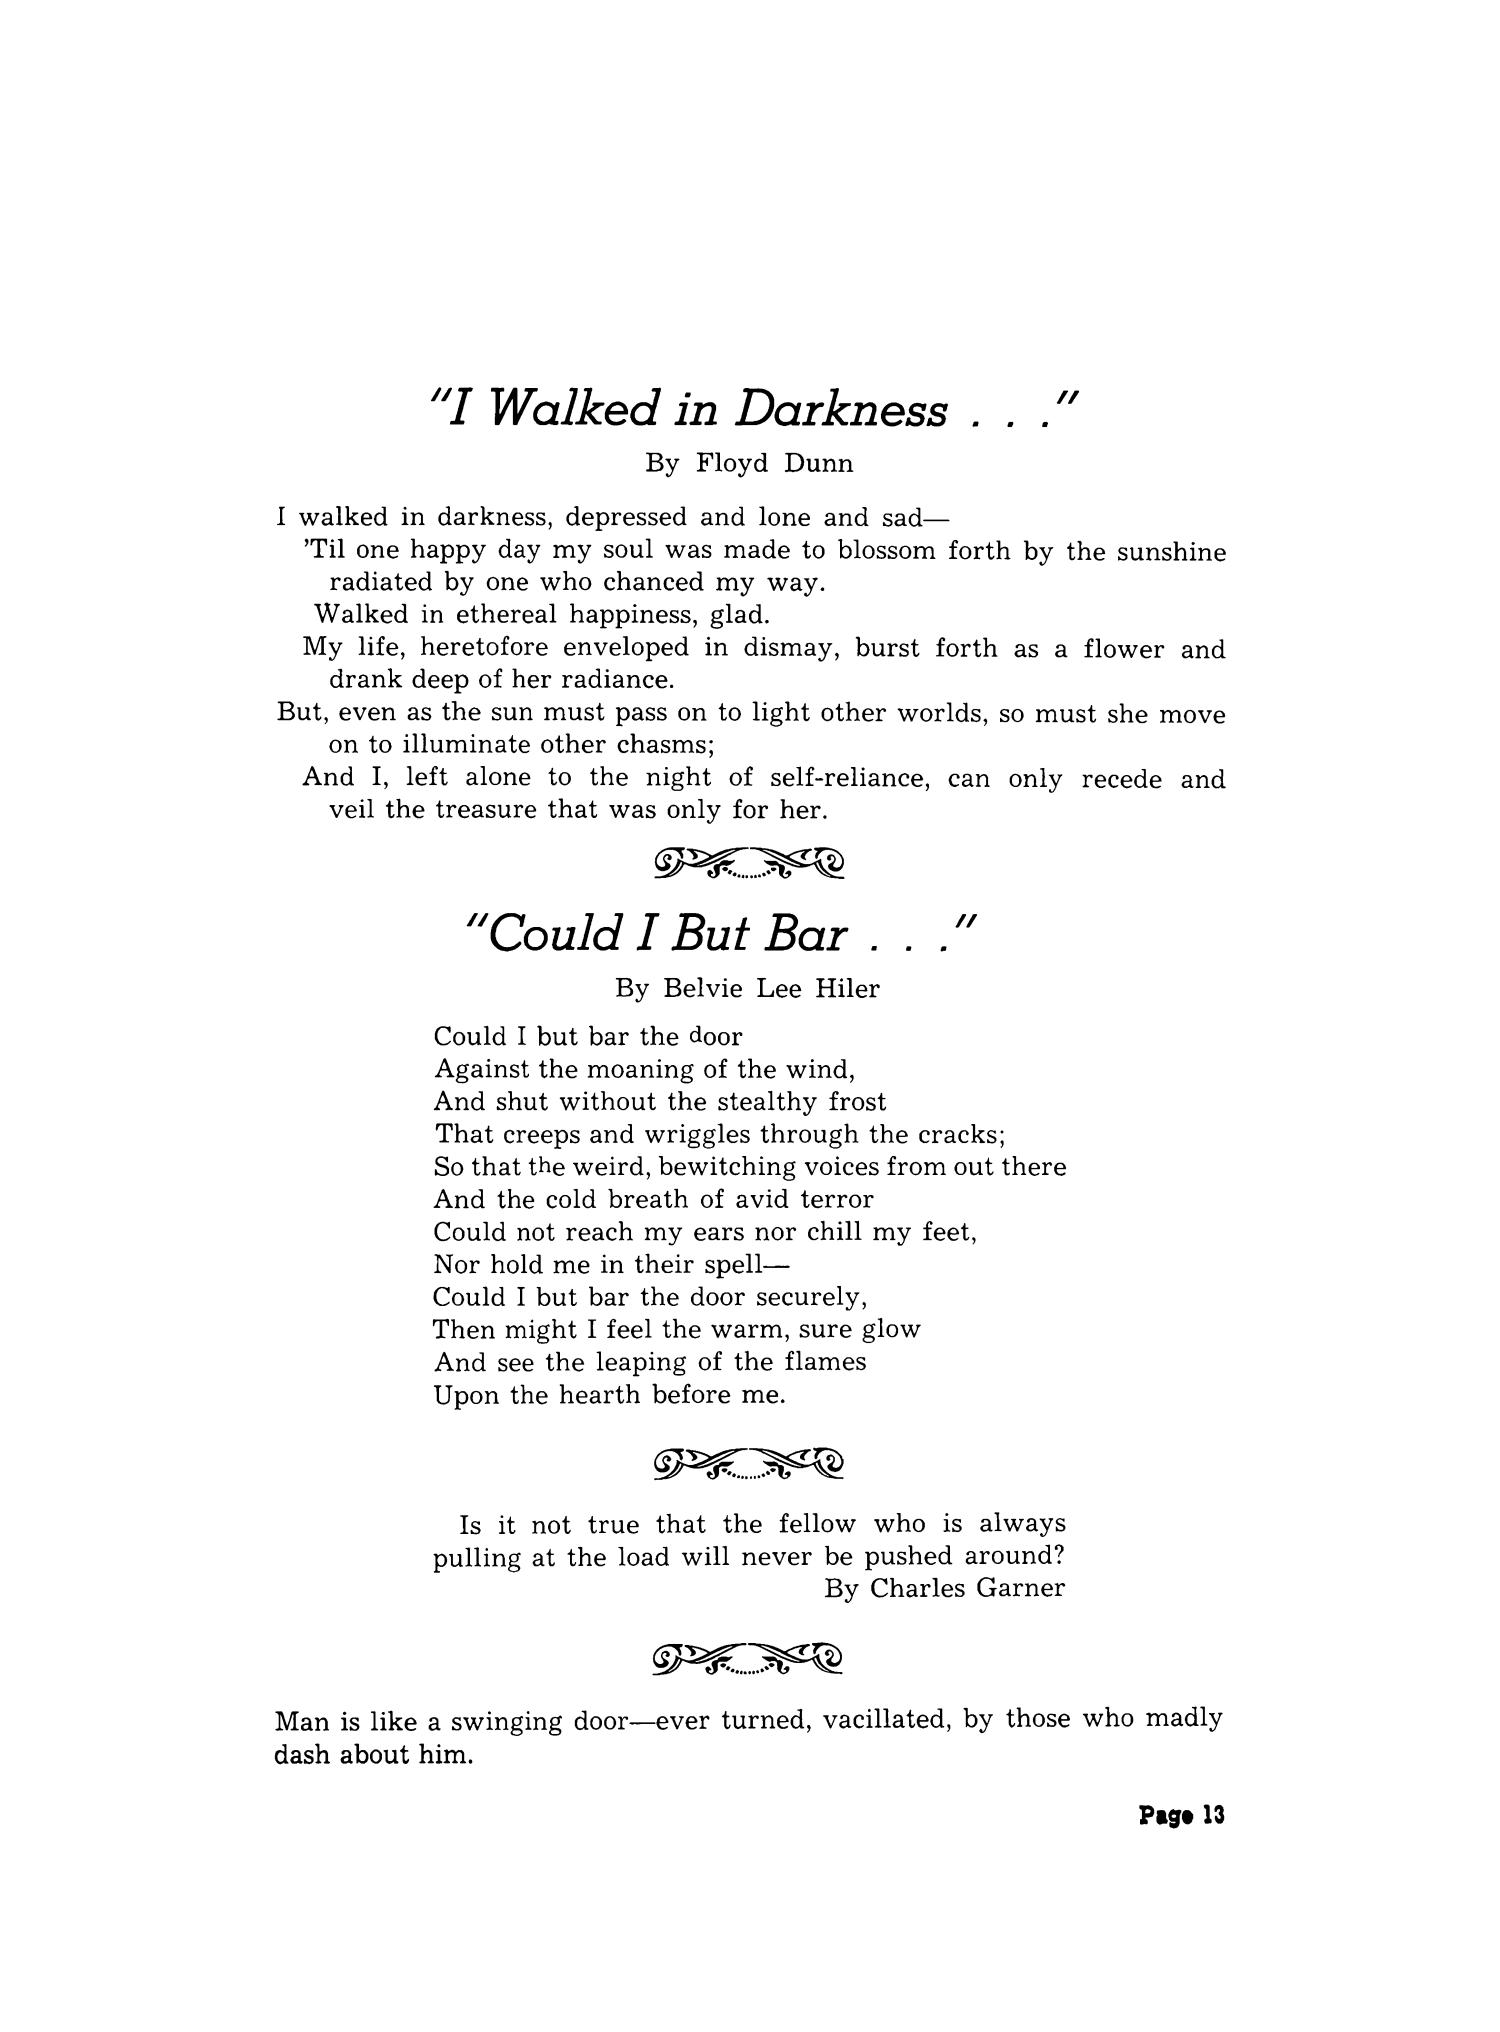 The Pickwicker, Volume 11, Number 1, Winter 1942-1943
                                                
                                                    13
                                                